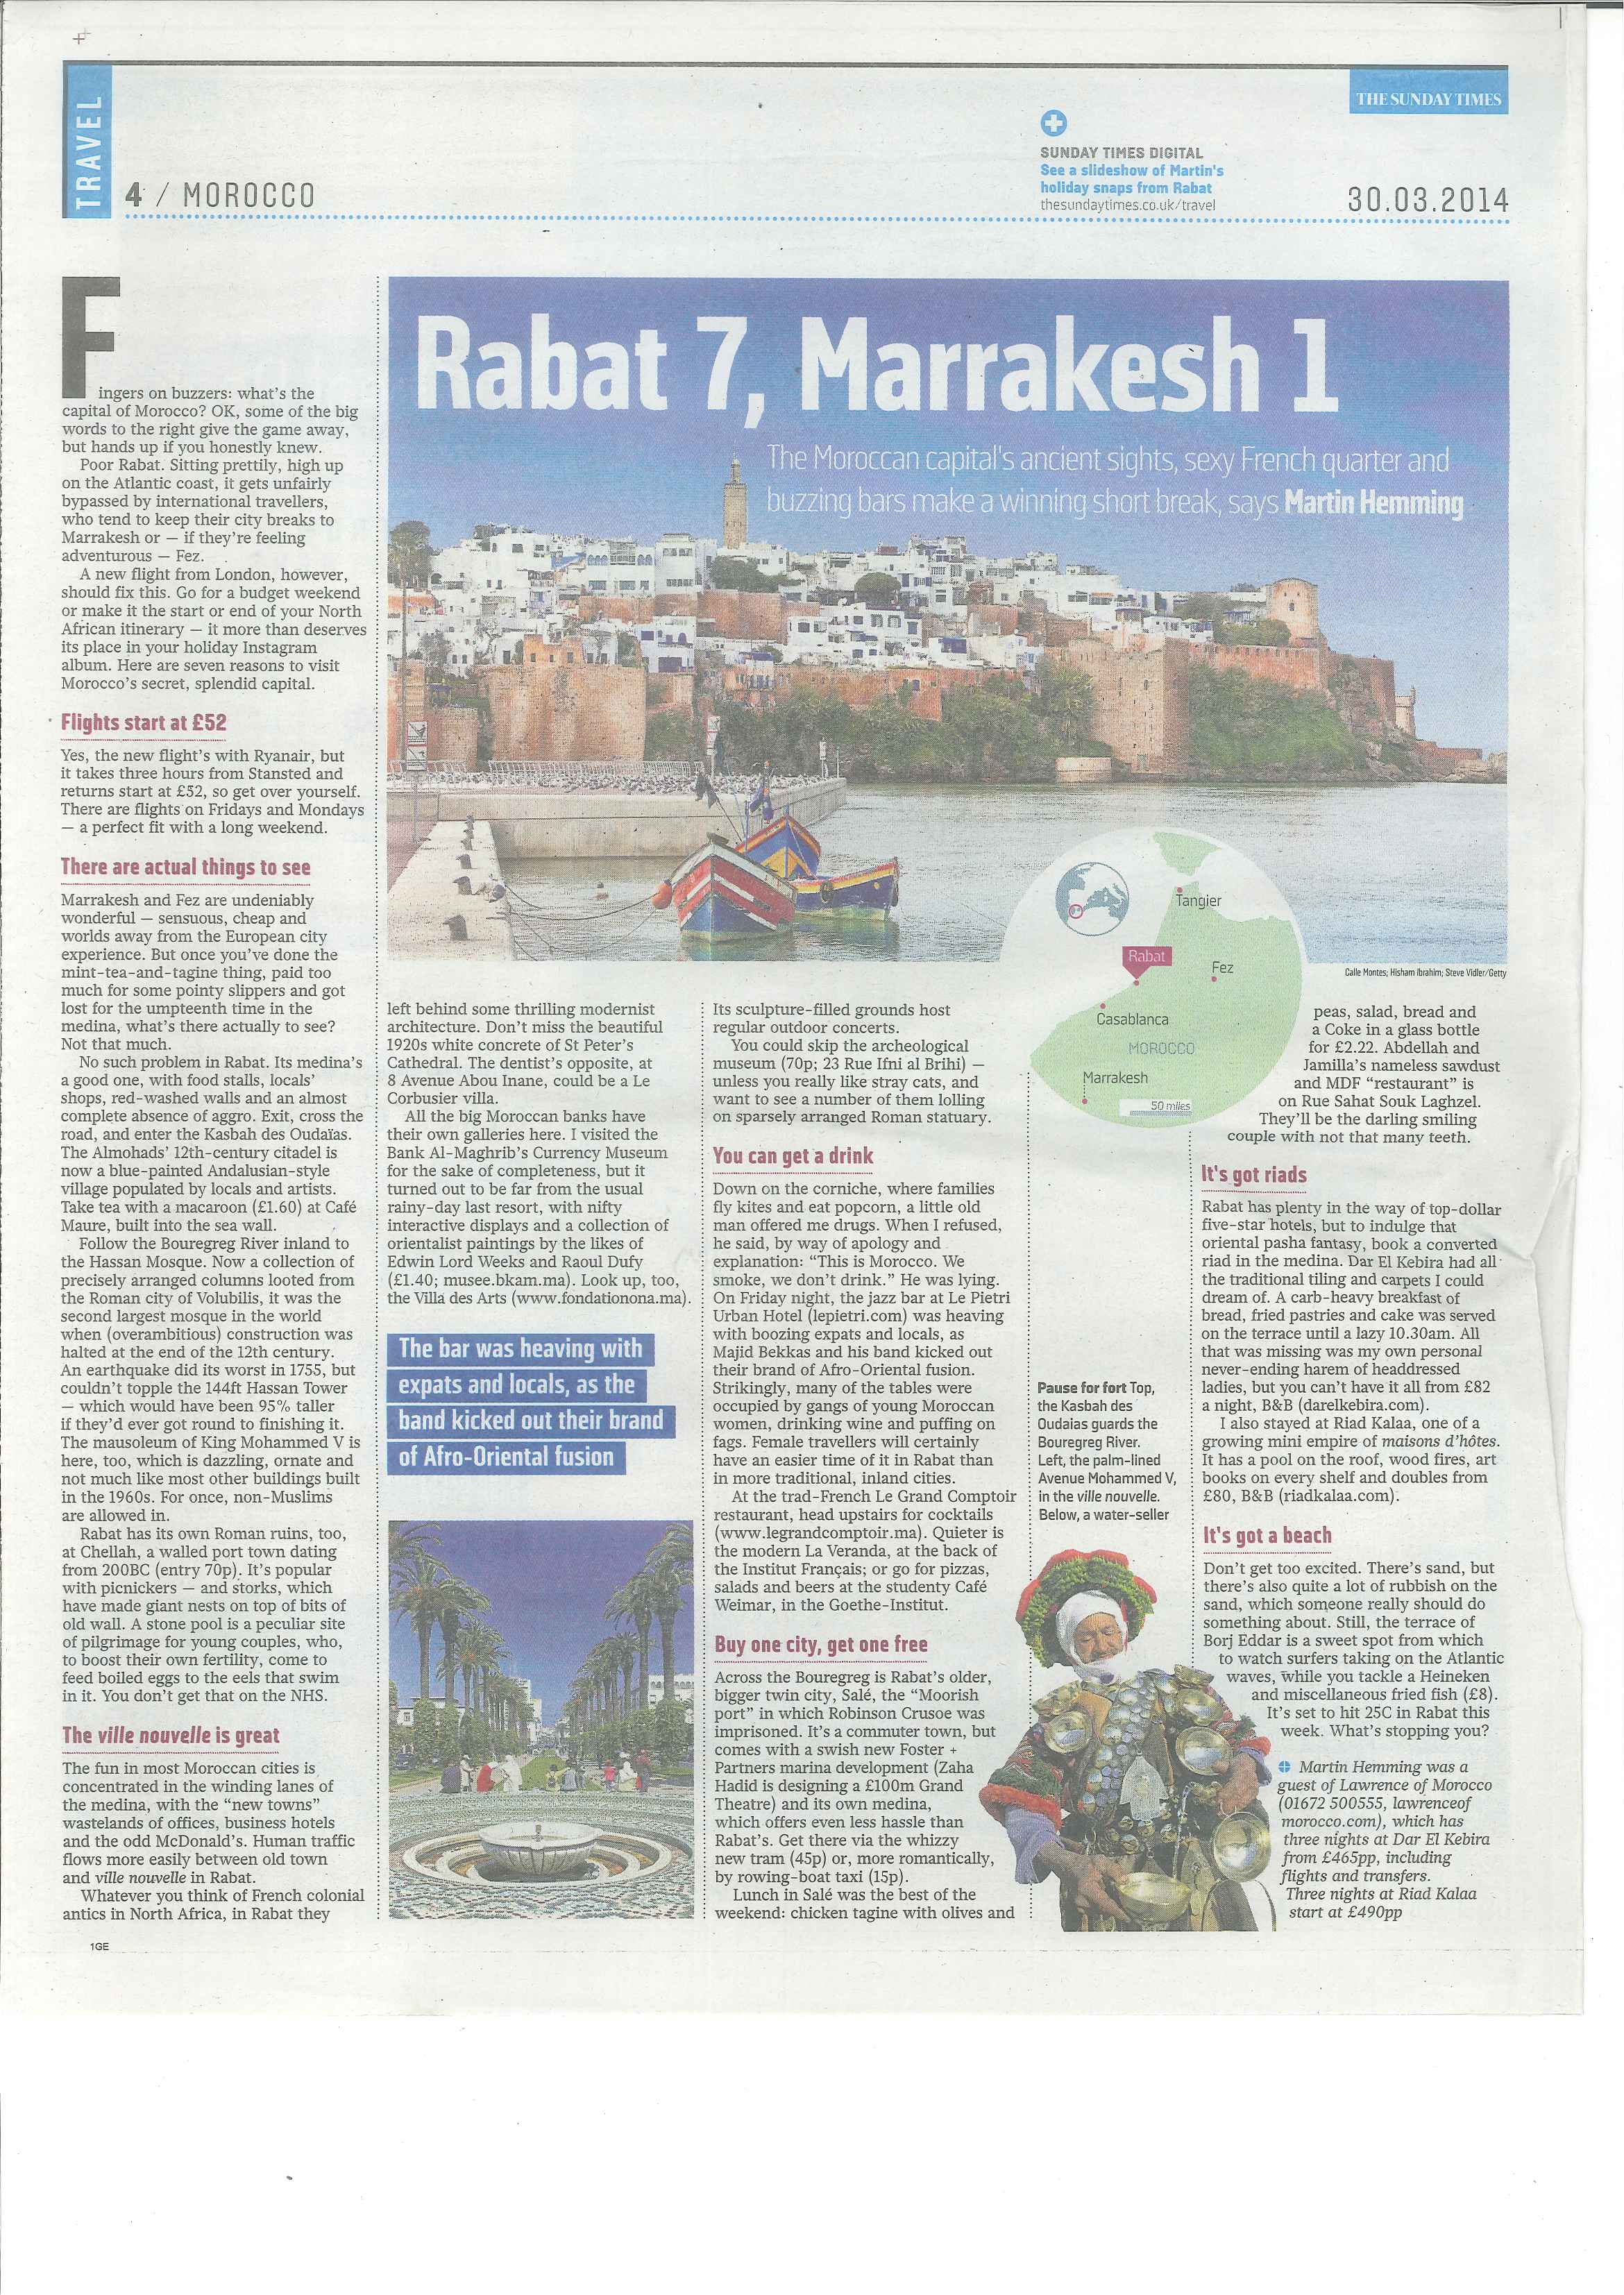 The Sunday Times 30.3.14 (Martin Hemming on Rabat)